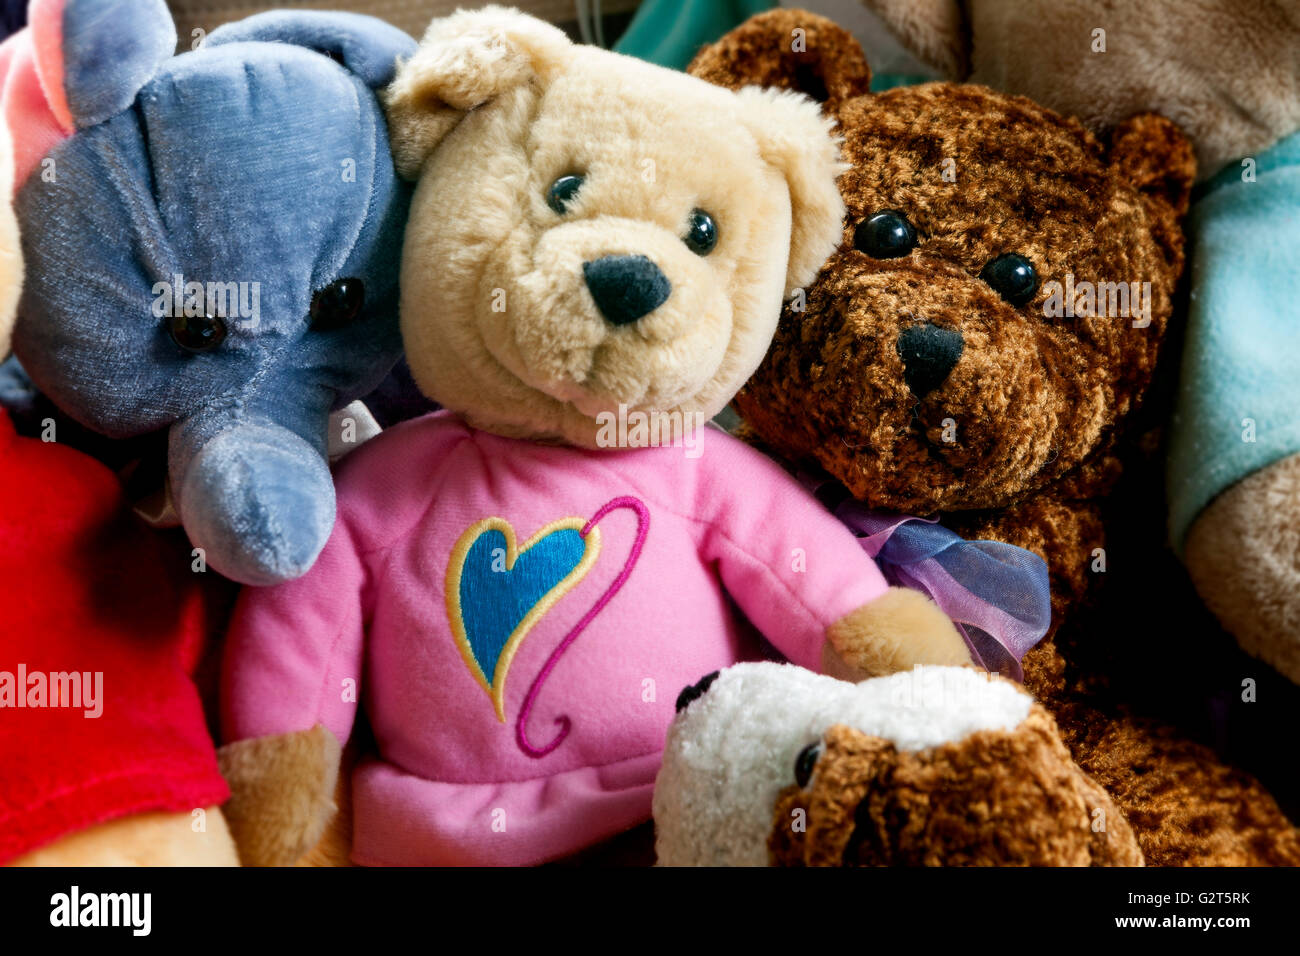 WA11686-00...WASHINGTON - Stuffed animals in a child's room Stock Photo